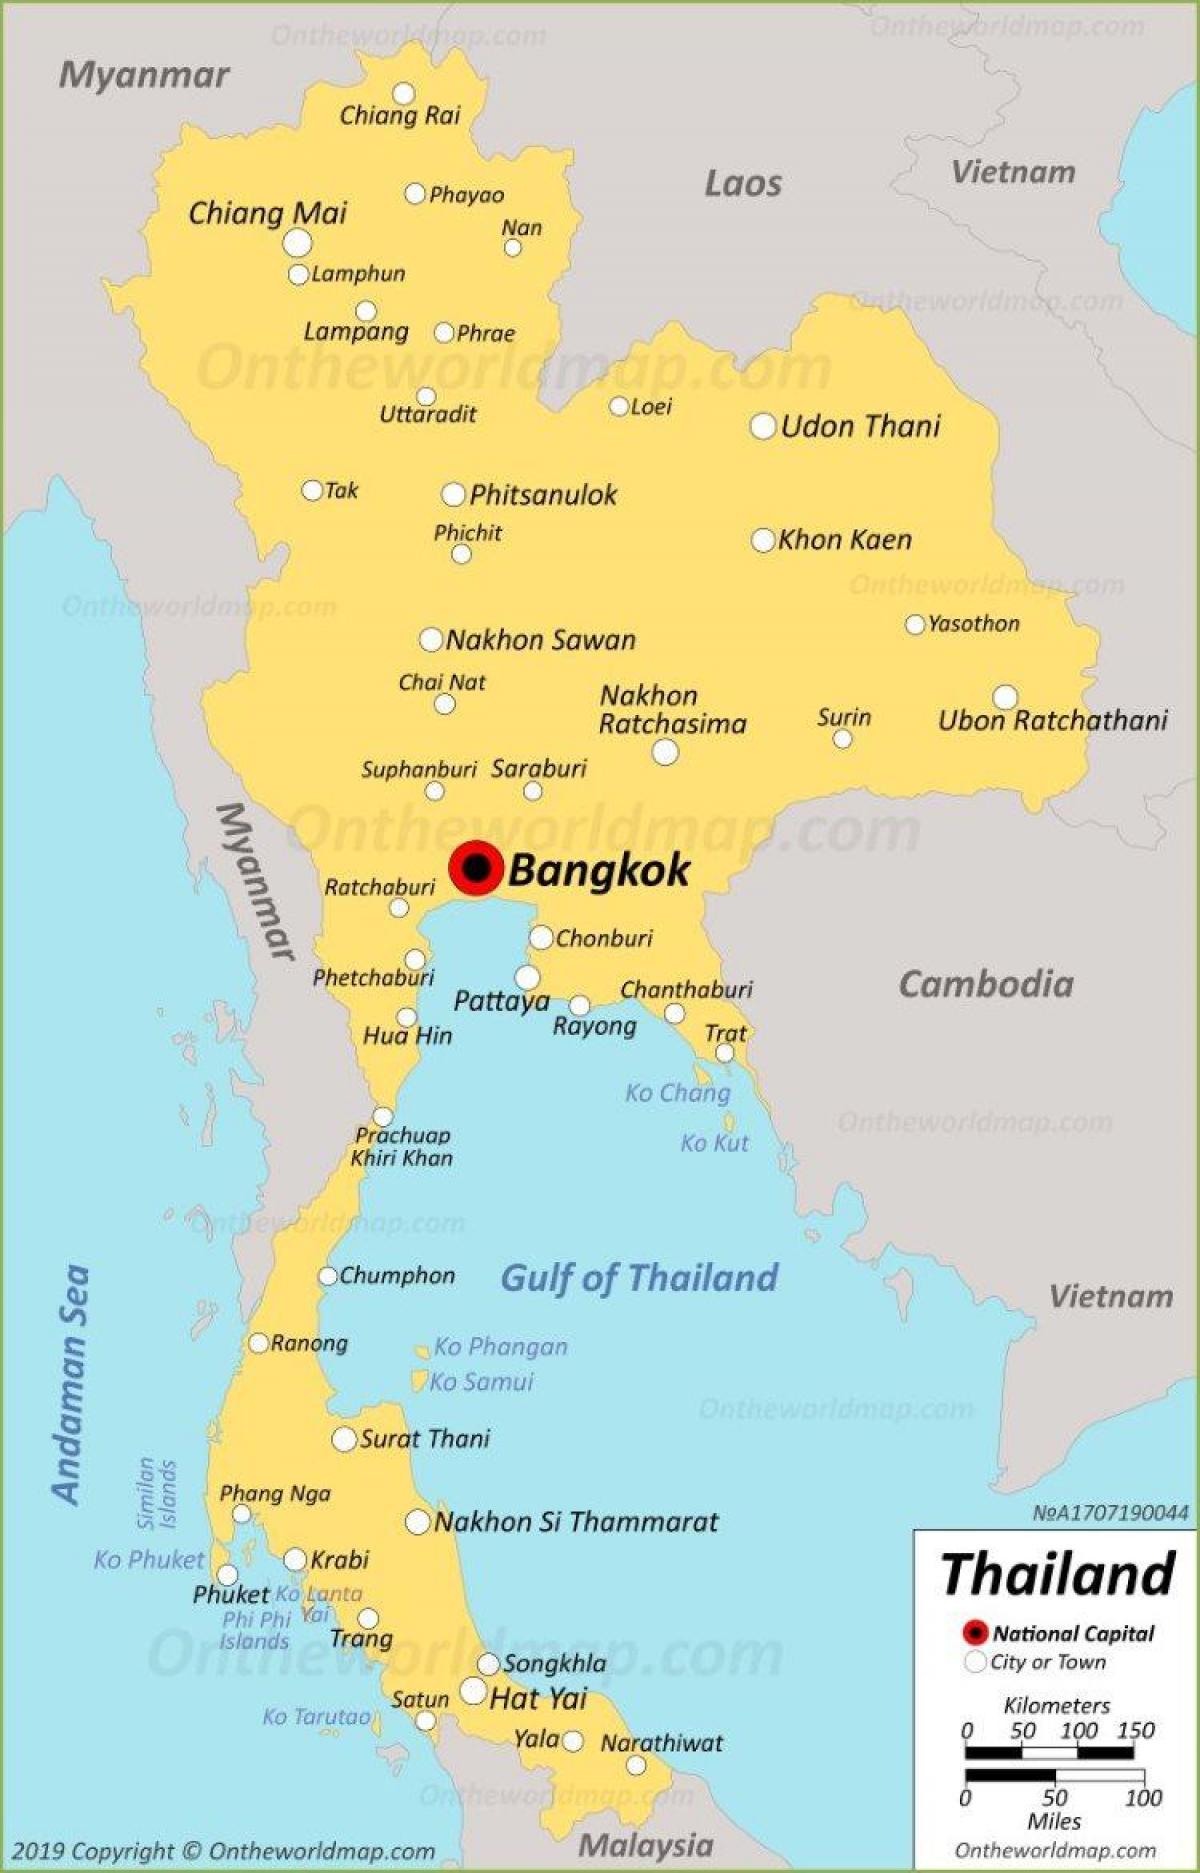 Thailand capital map